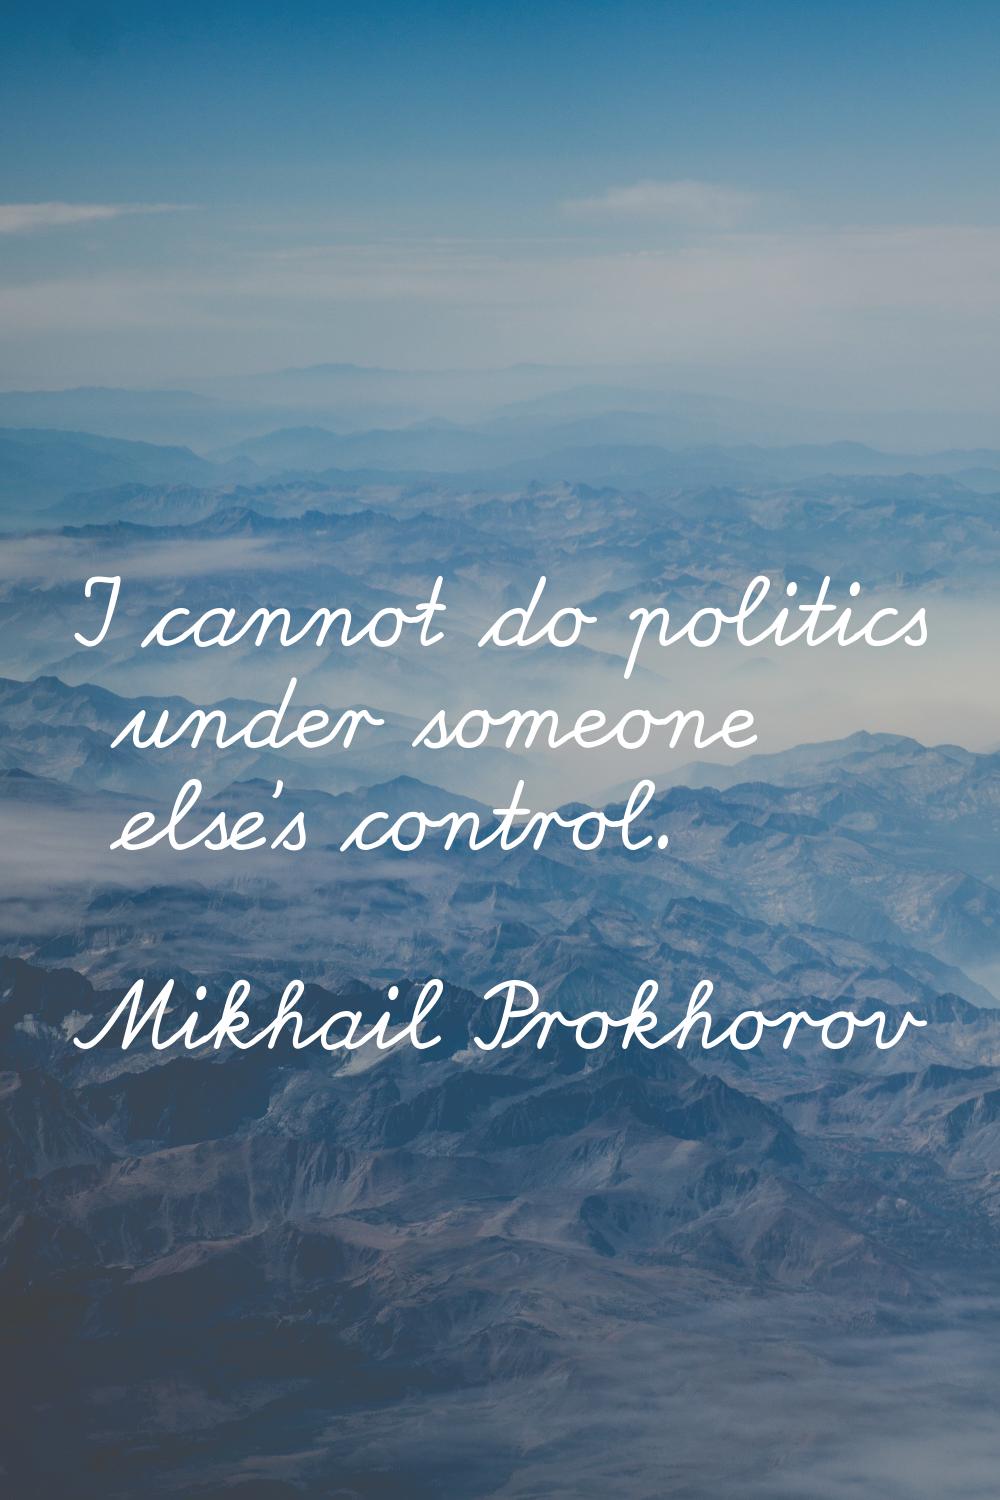 I cannot do politics under someone else's control.